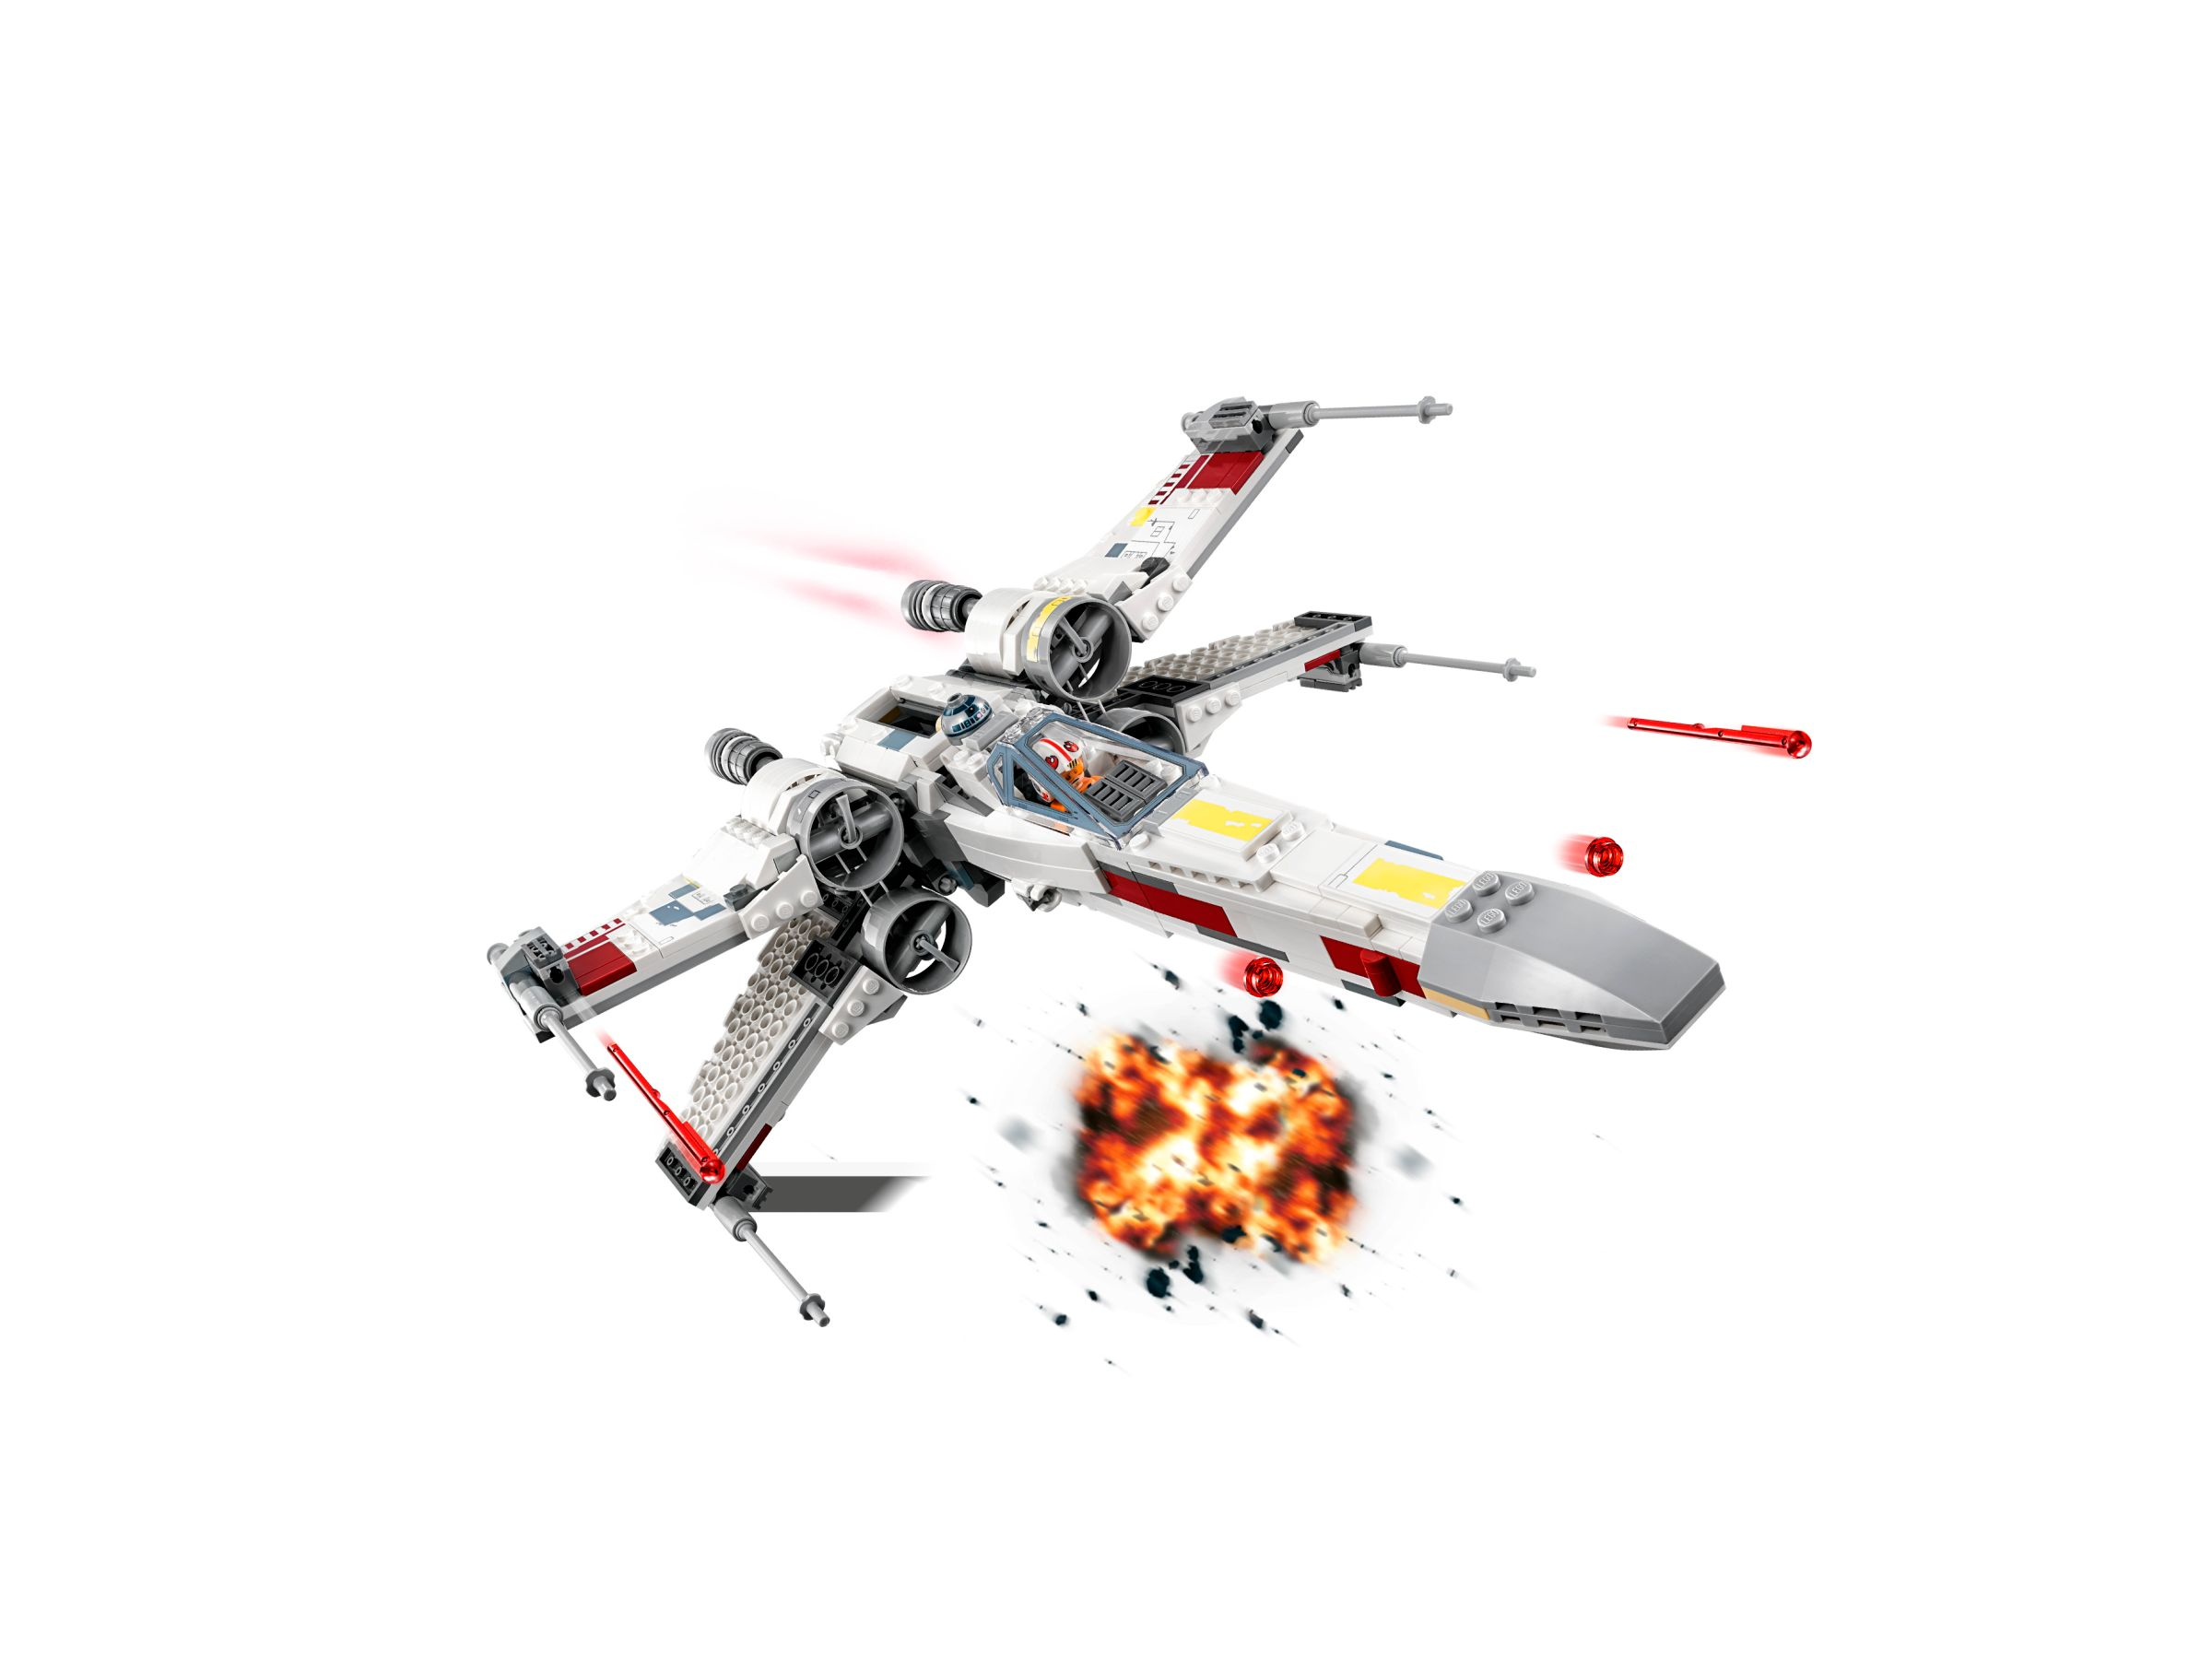 LEGO 75218 X-Wing Bausatz Starfighter™